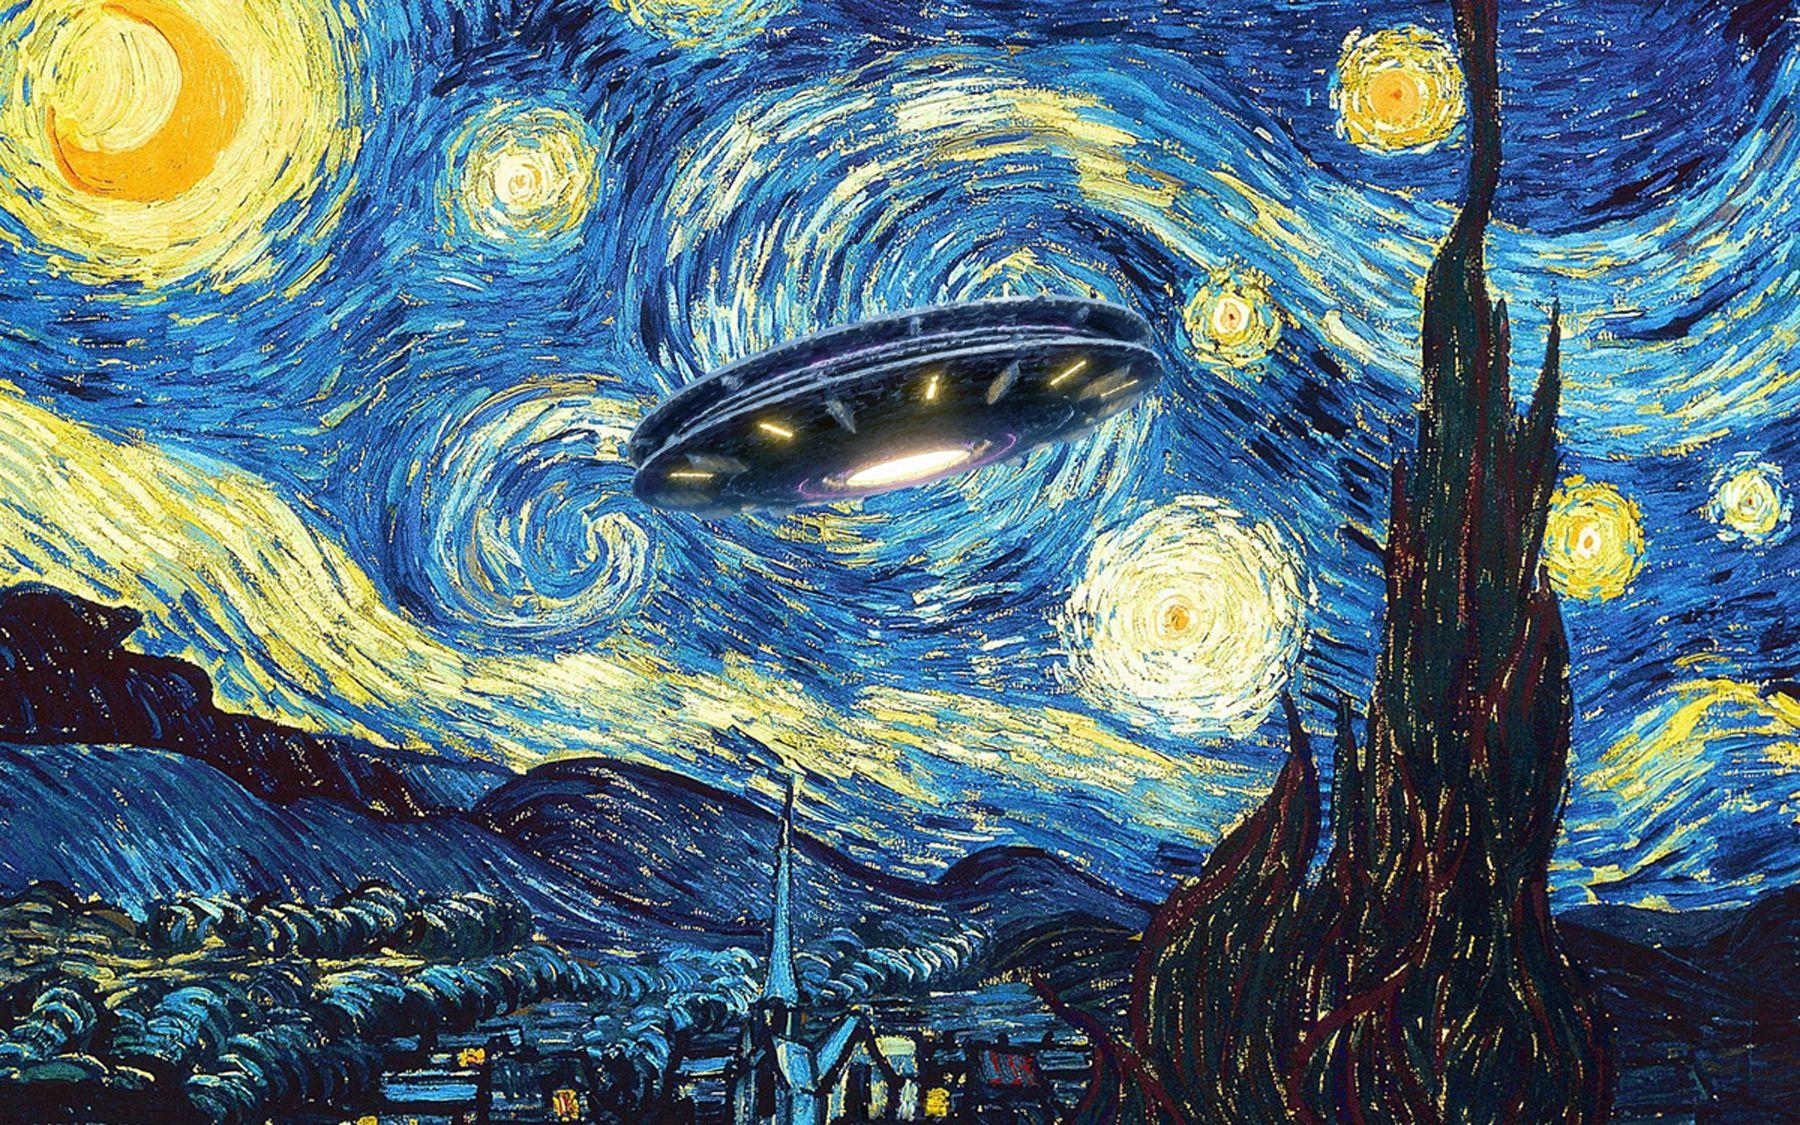 UFO Alien Abduction Starry Night Van Gogh Painting, Mixed Media on Canvas